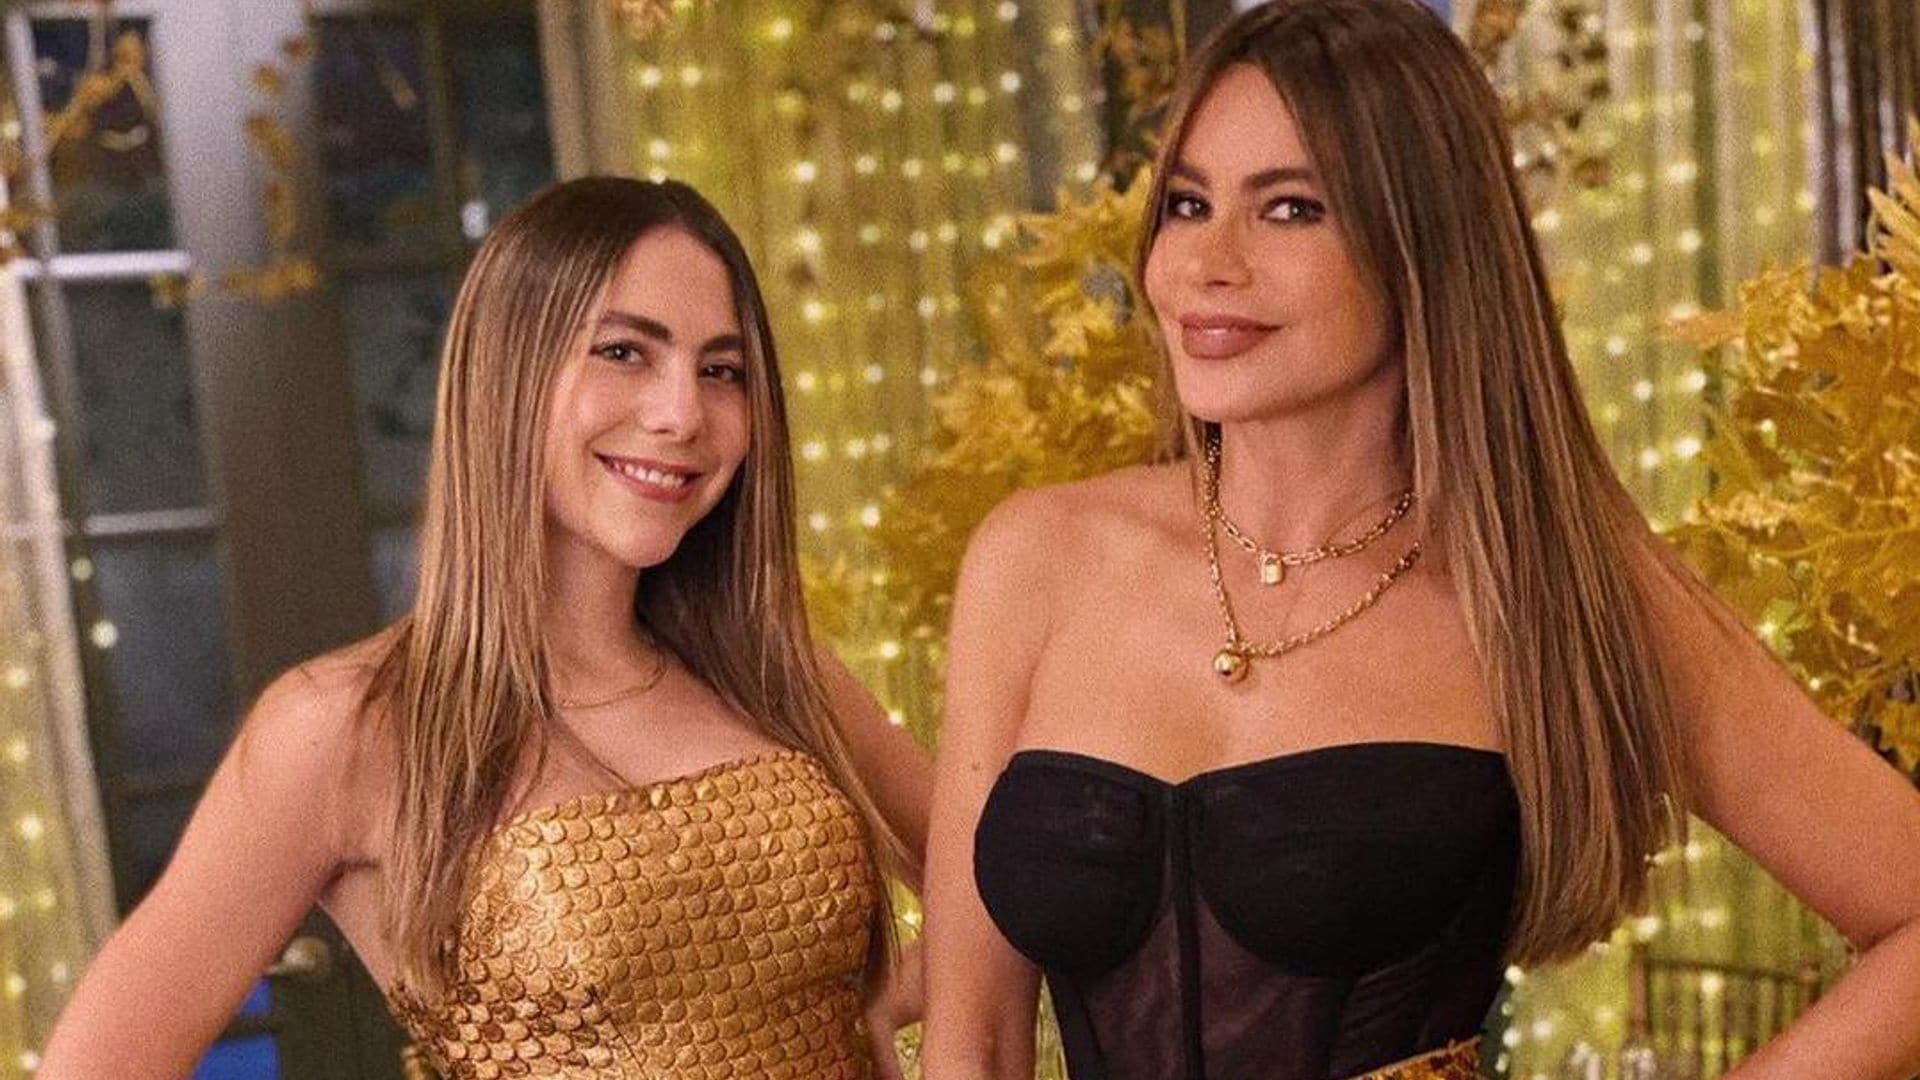 Sofia Vergara's niece Claudia looks just as good in a bikini as her famous aunt